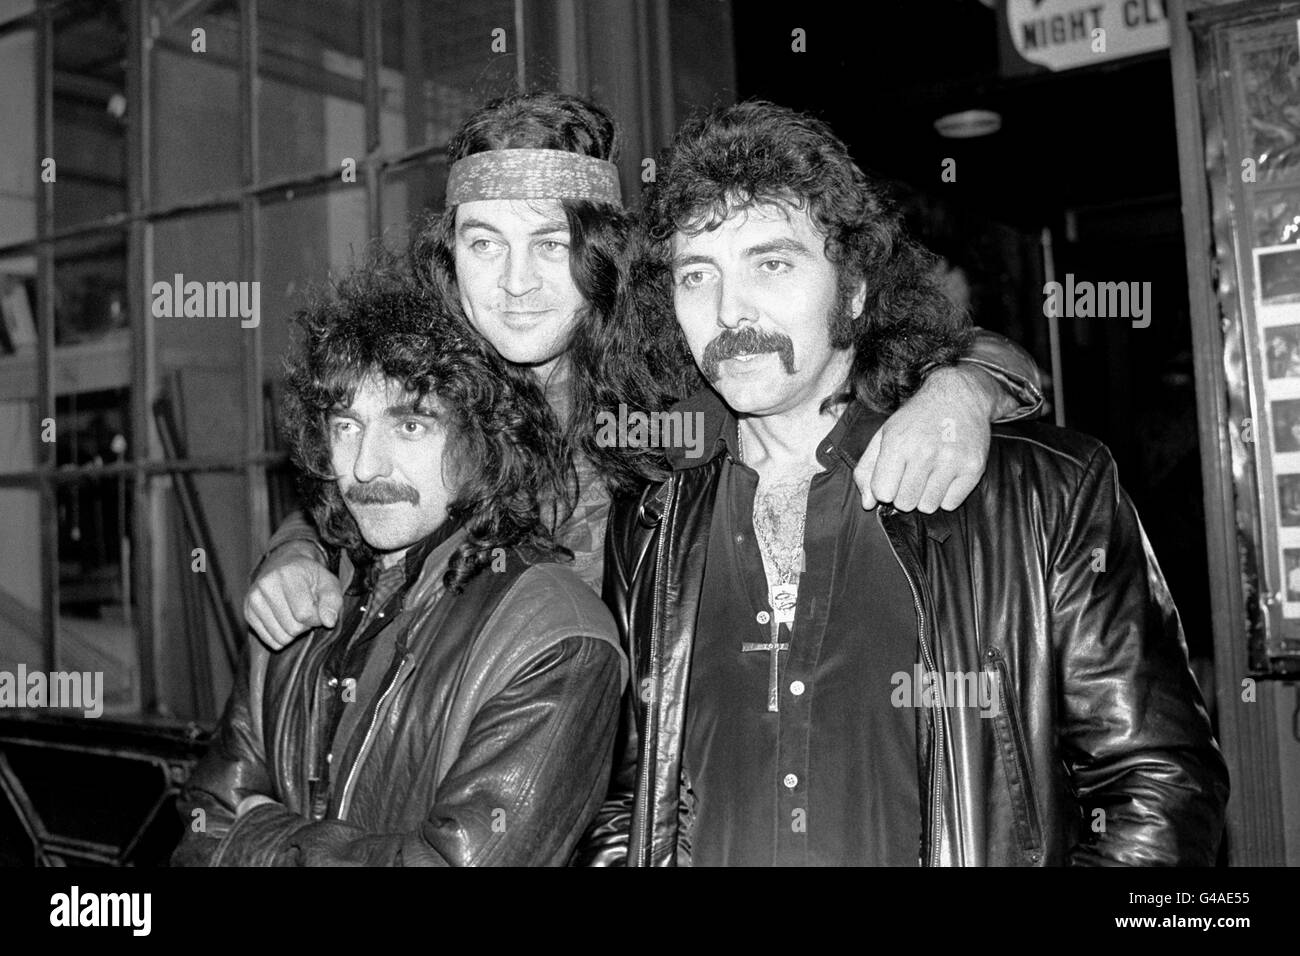 Music - Gillan Joins Black Sabbath - 1983 Stock Photo